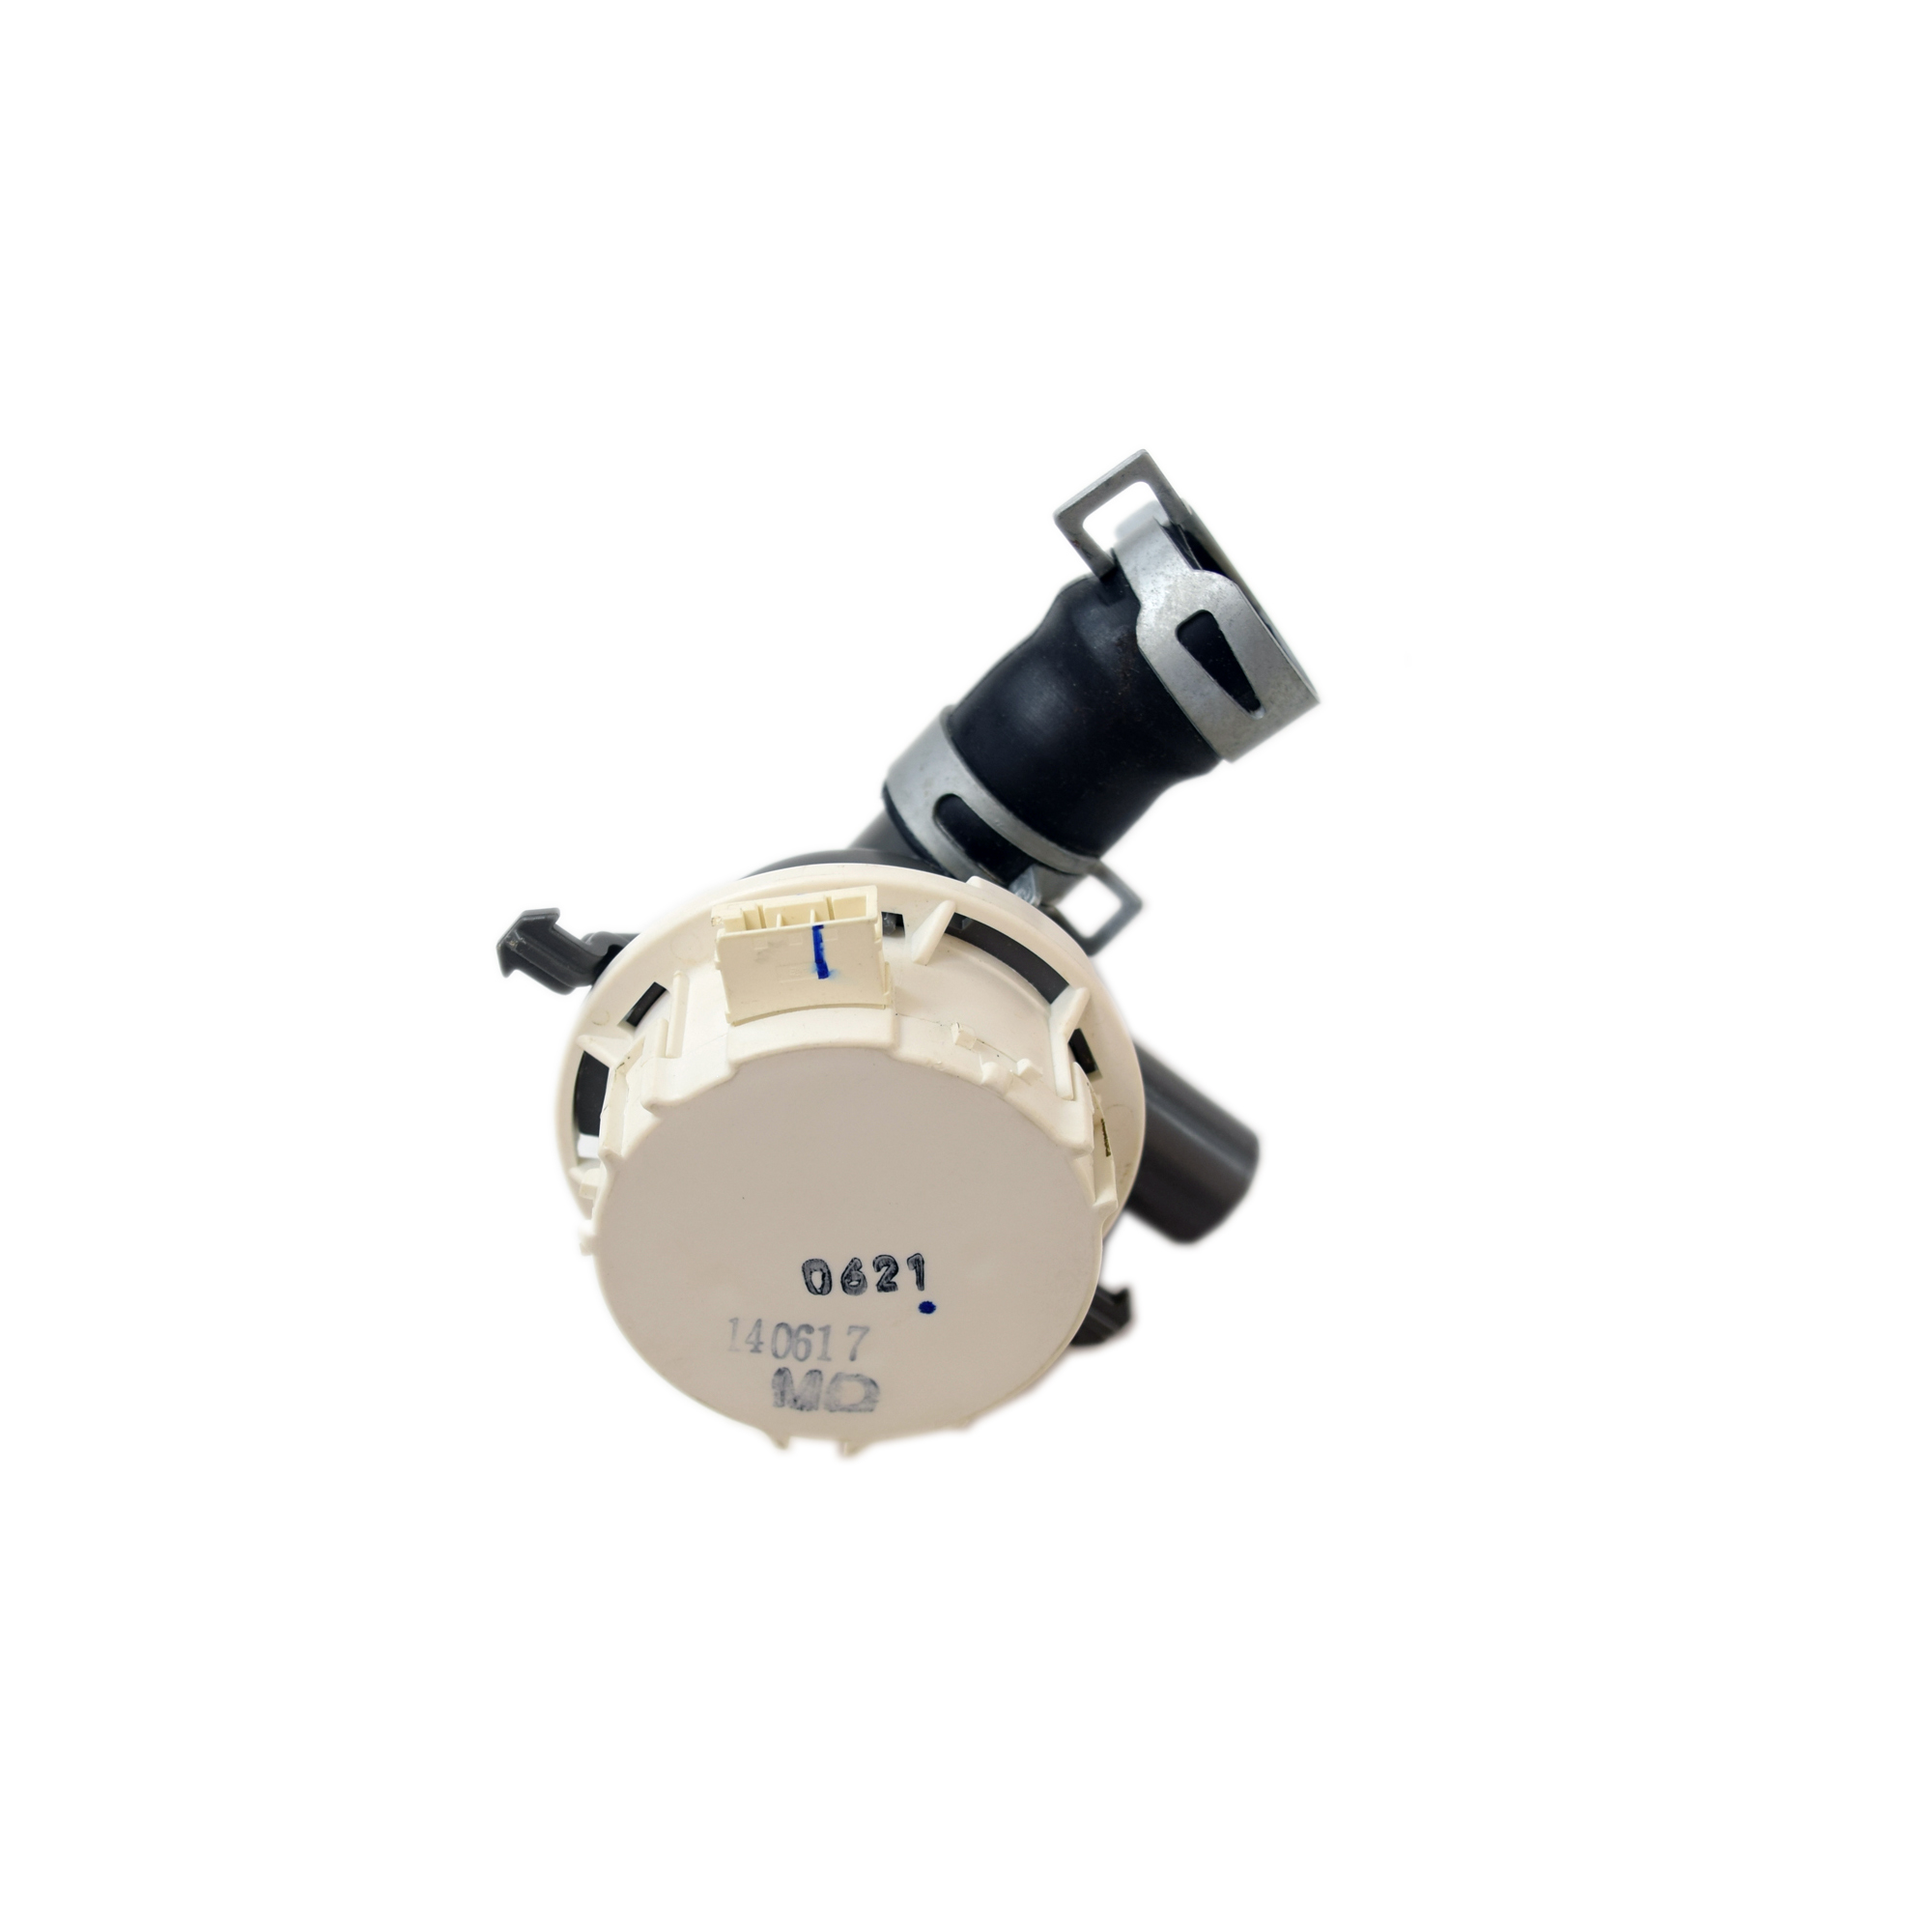 Lg ABQ73503004 Dishwasher Drain Pump (replaces ABQ73503002) Genuine Original Equipment Manufacturer (OEM) Part